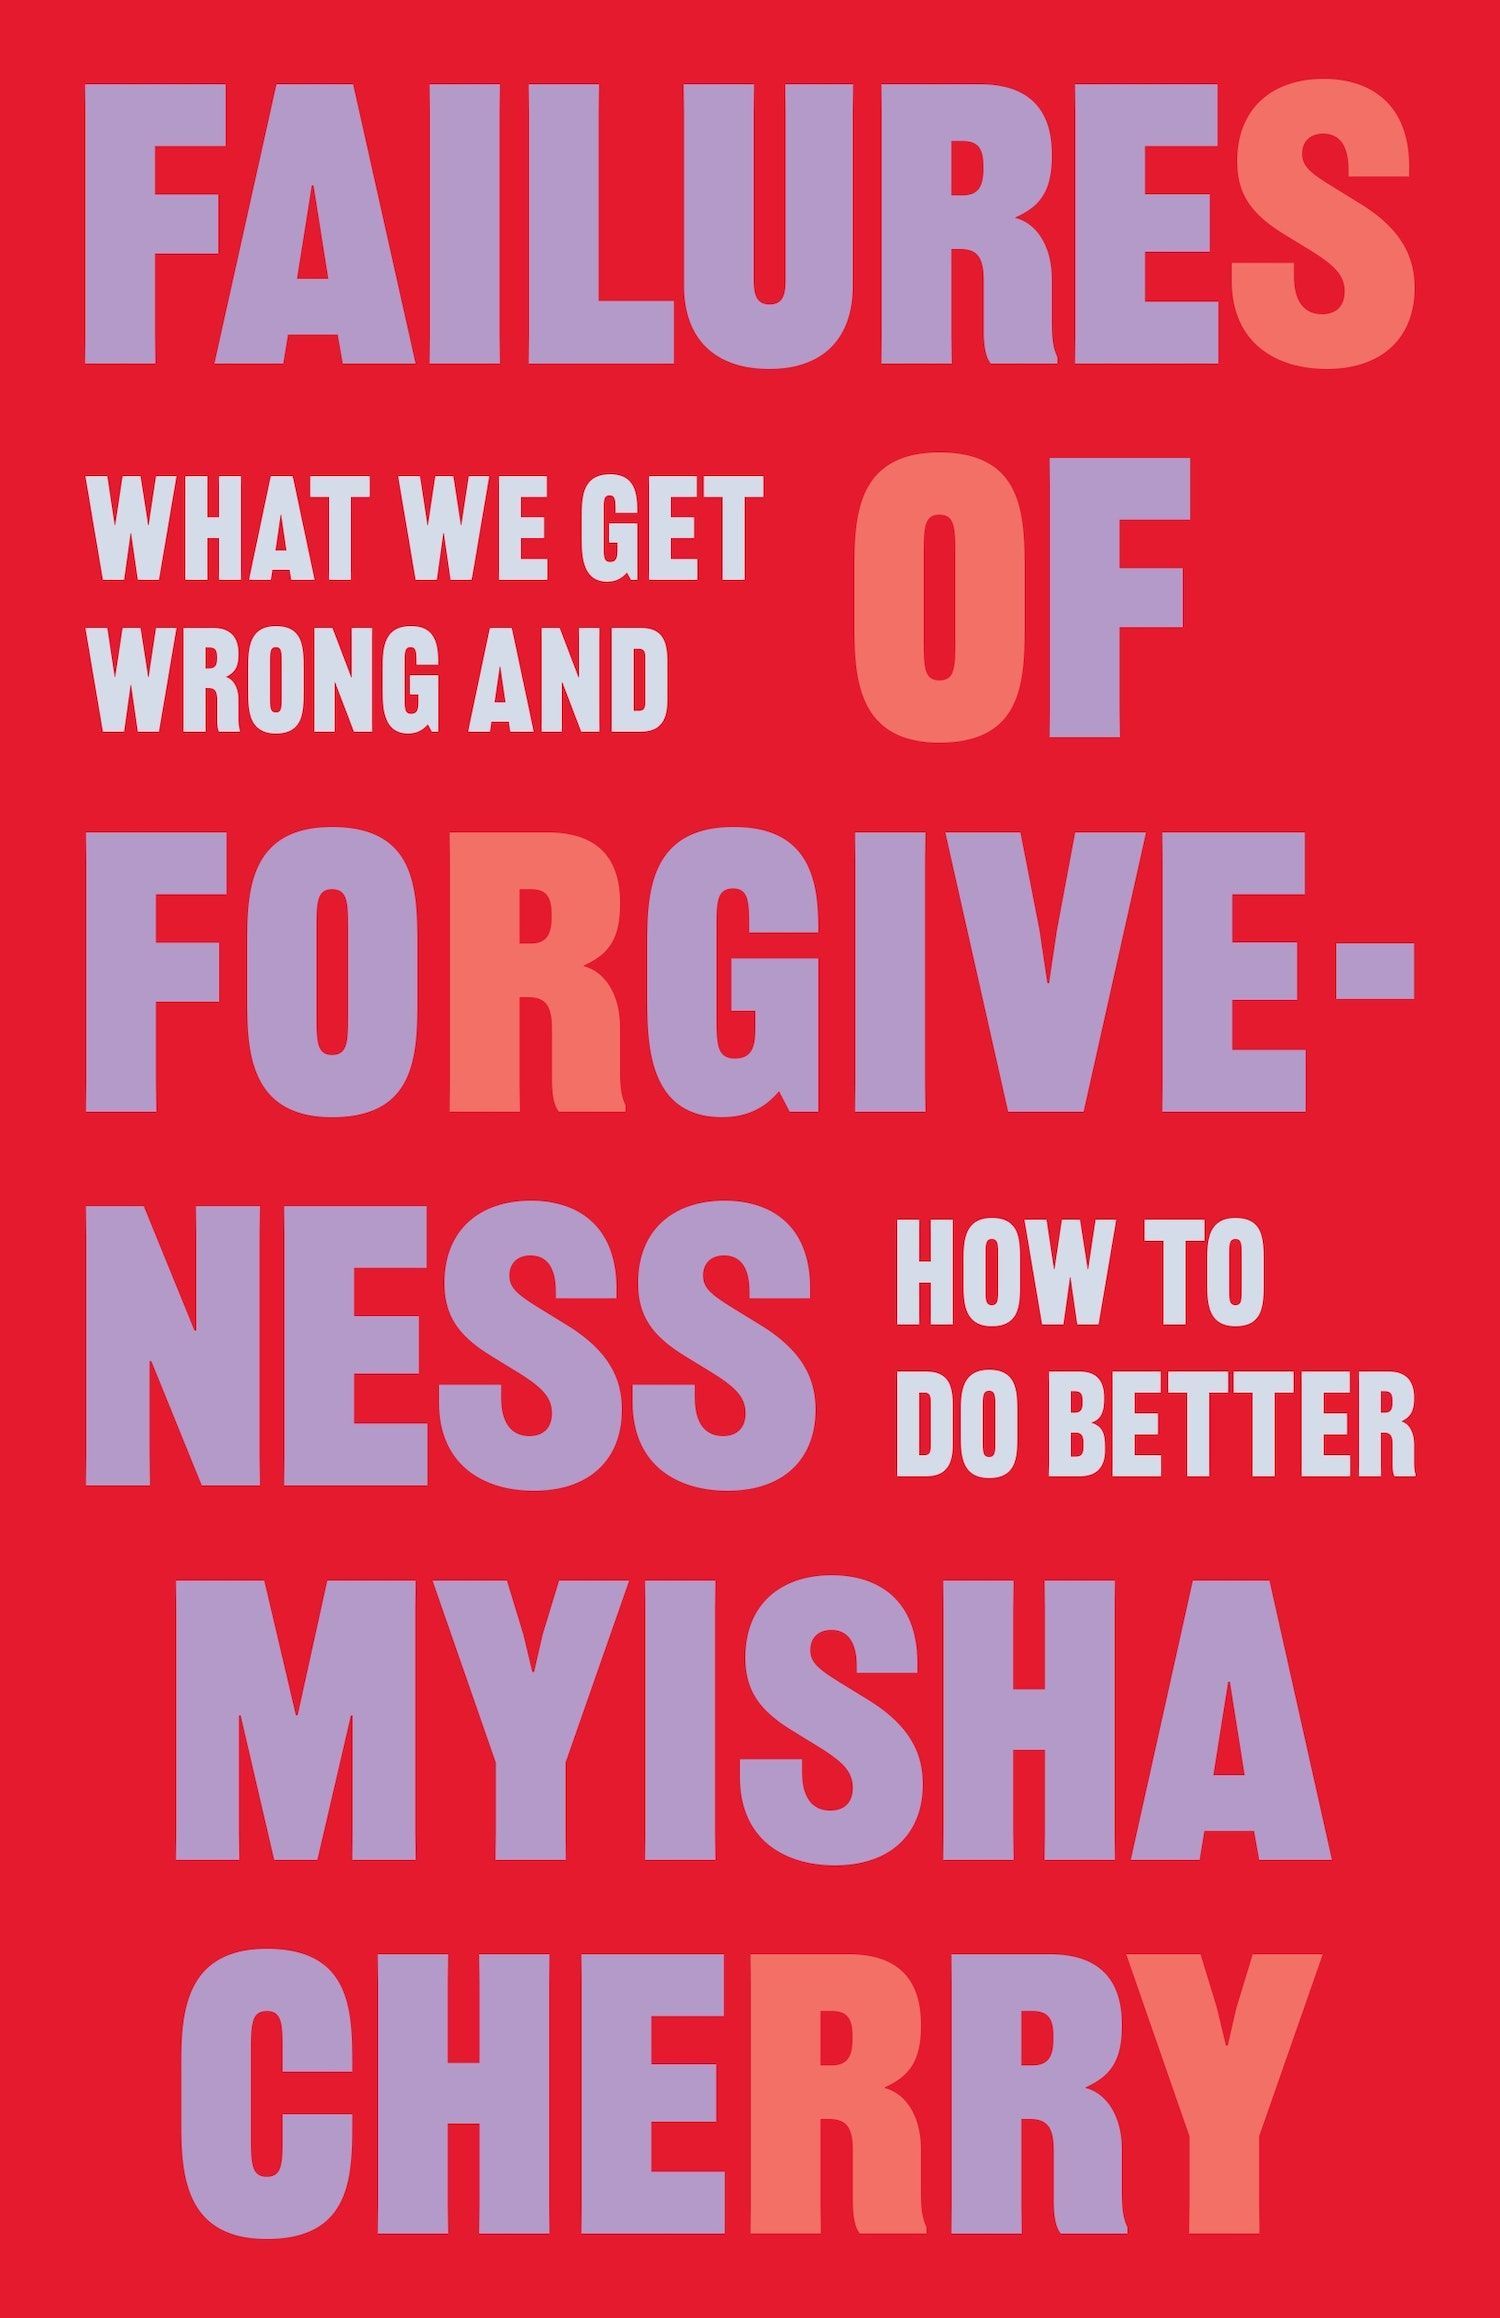 How Does Forgiveness Heal? On Myisha Cherry’s “Failures of Forgiveness”